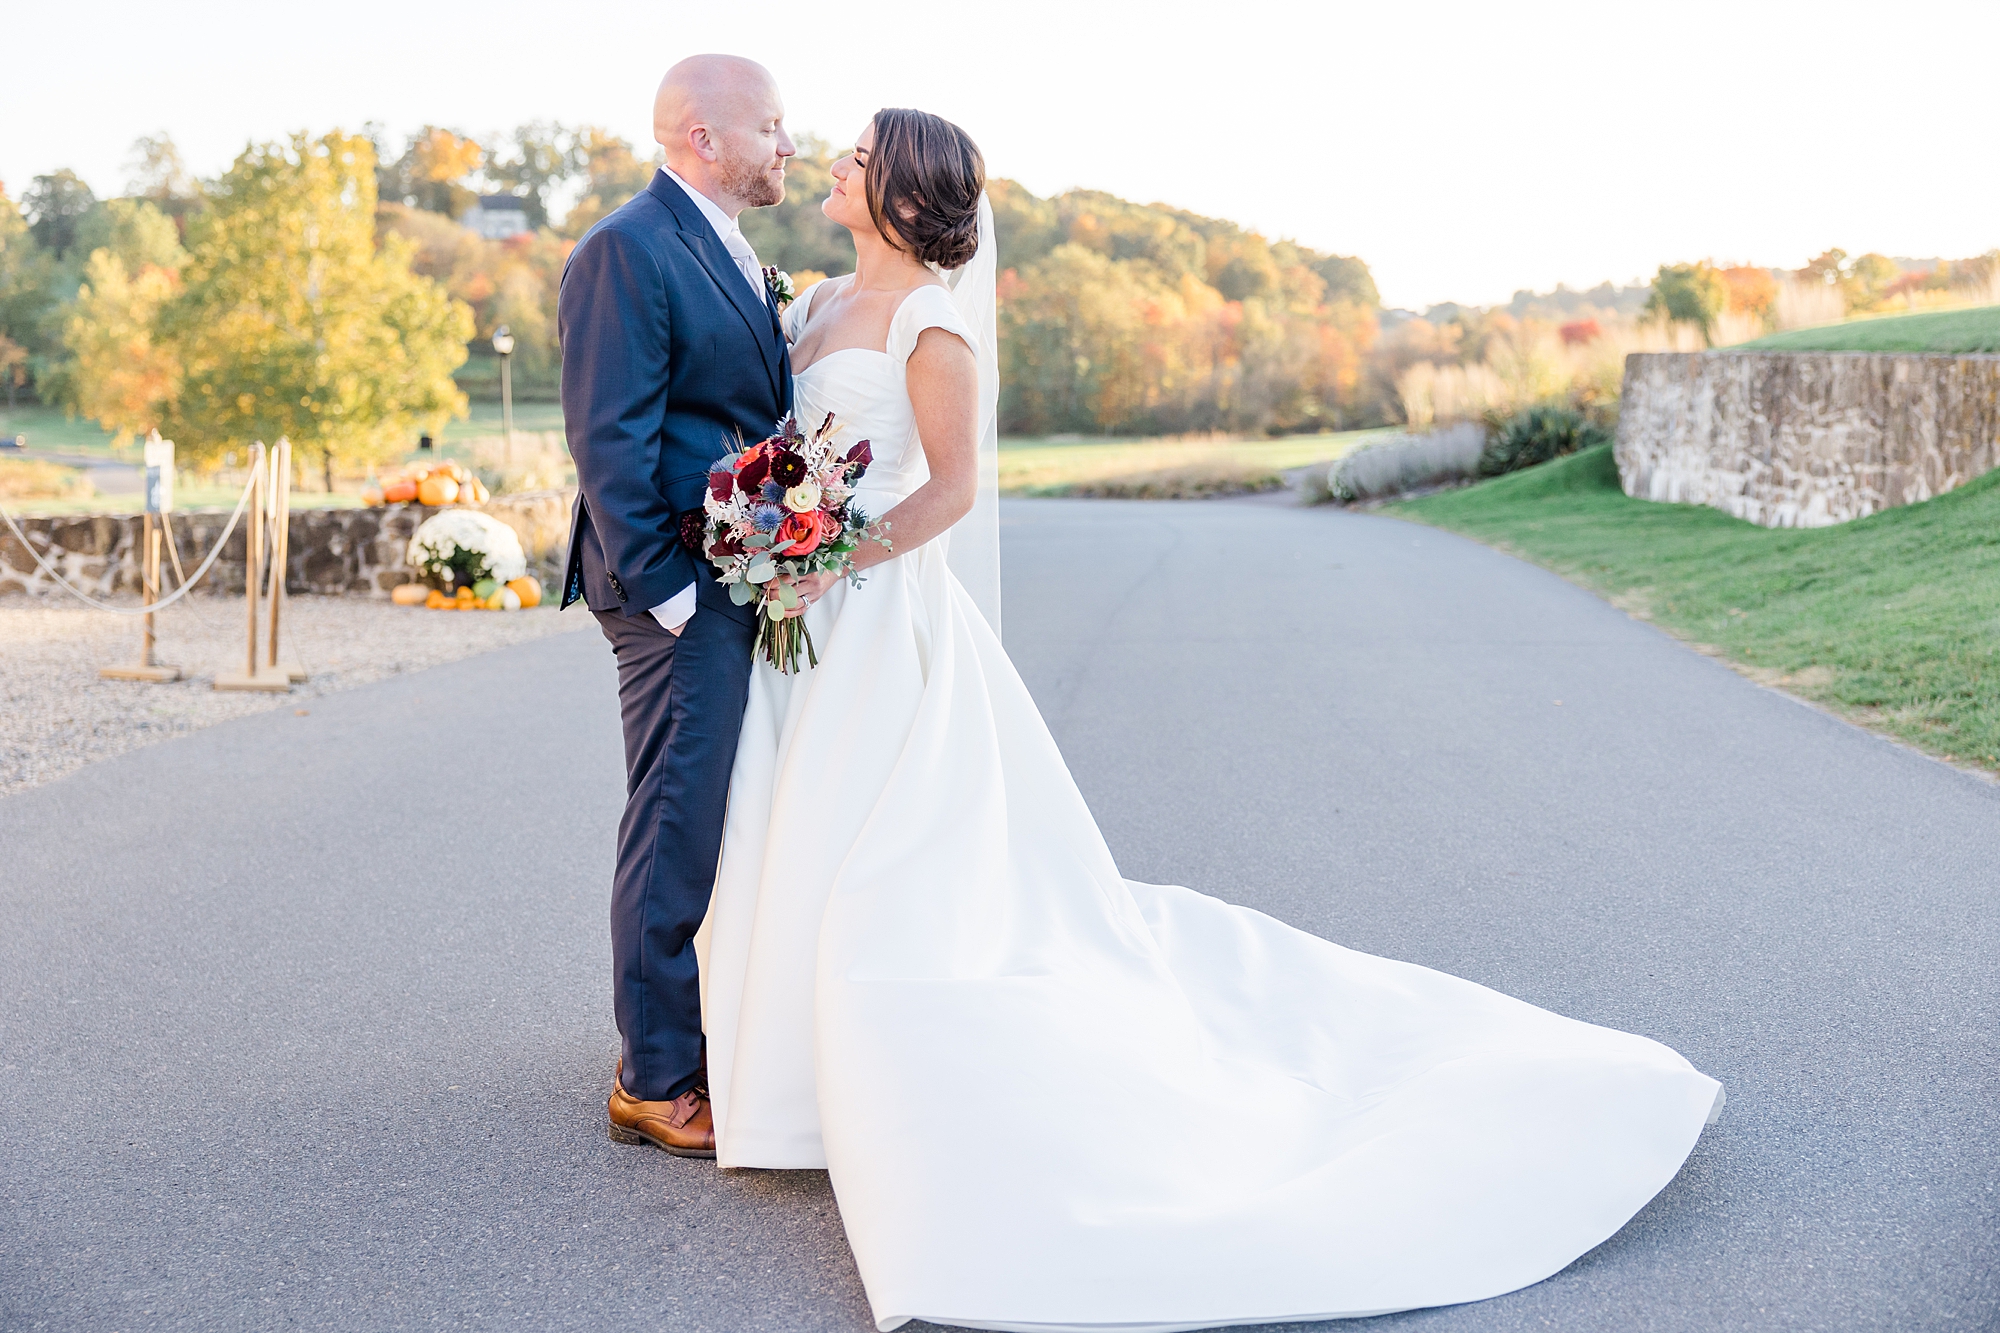 PA wedding photographer captures wedding portraits at French Creek